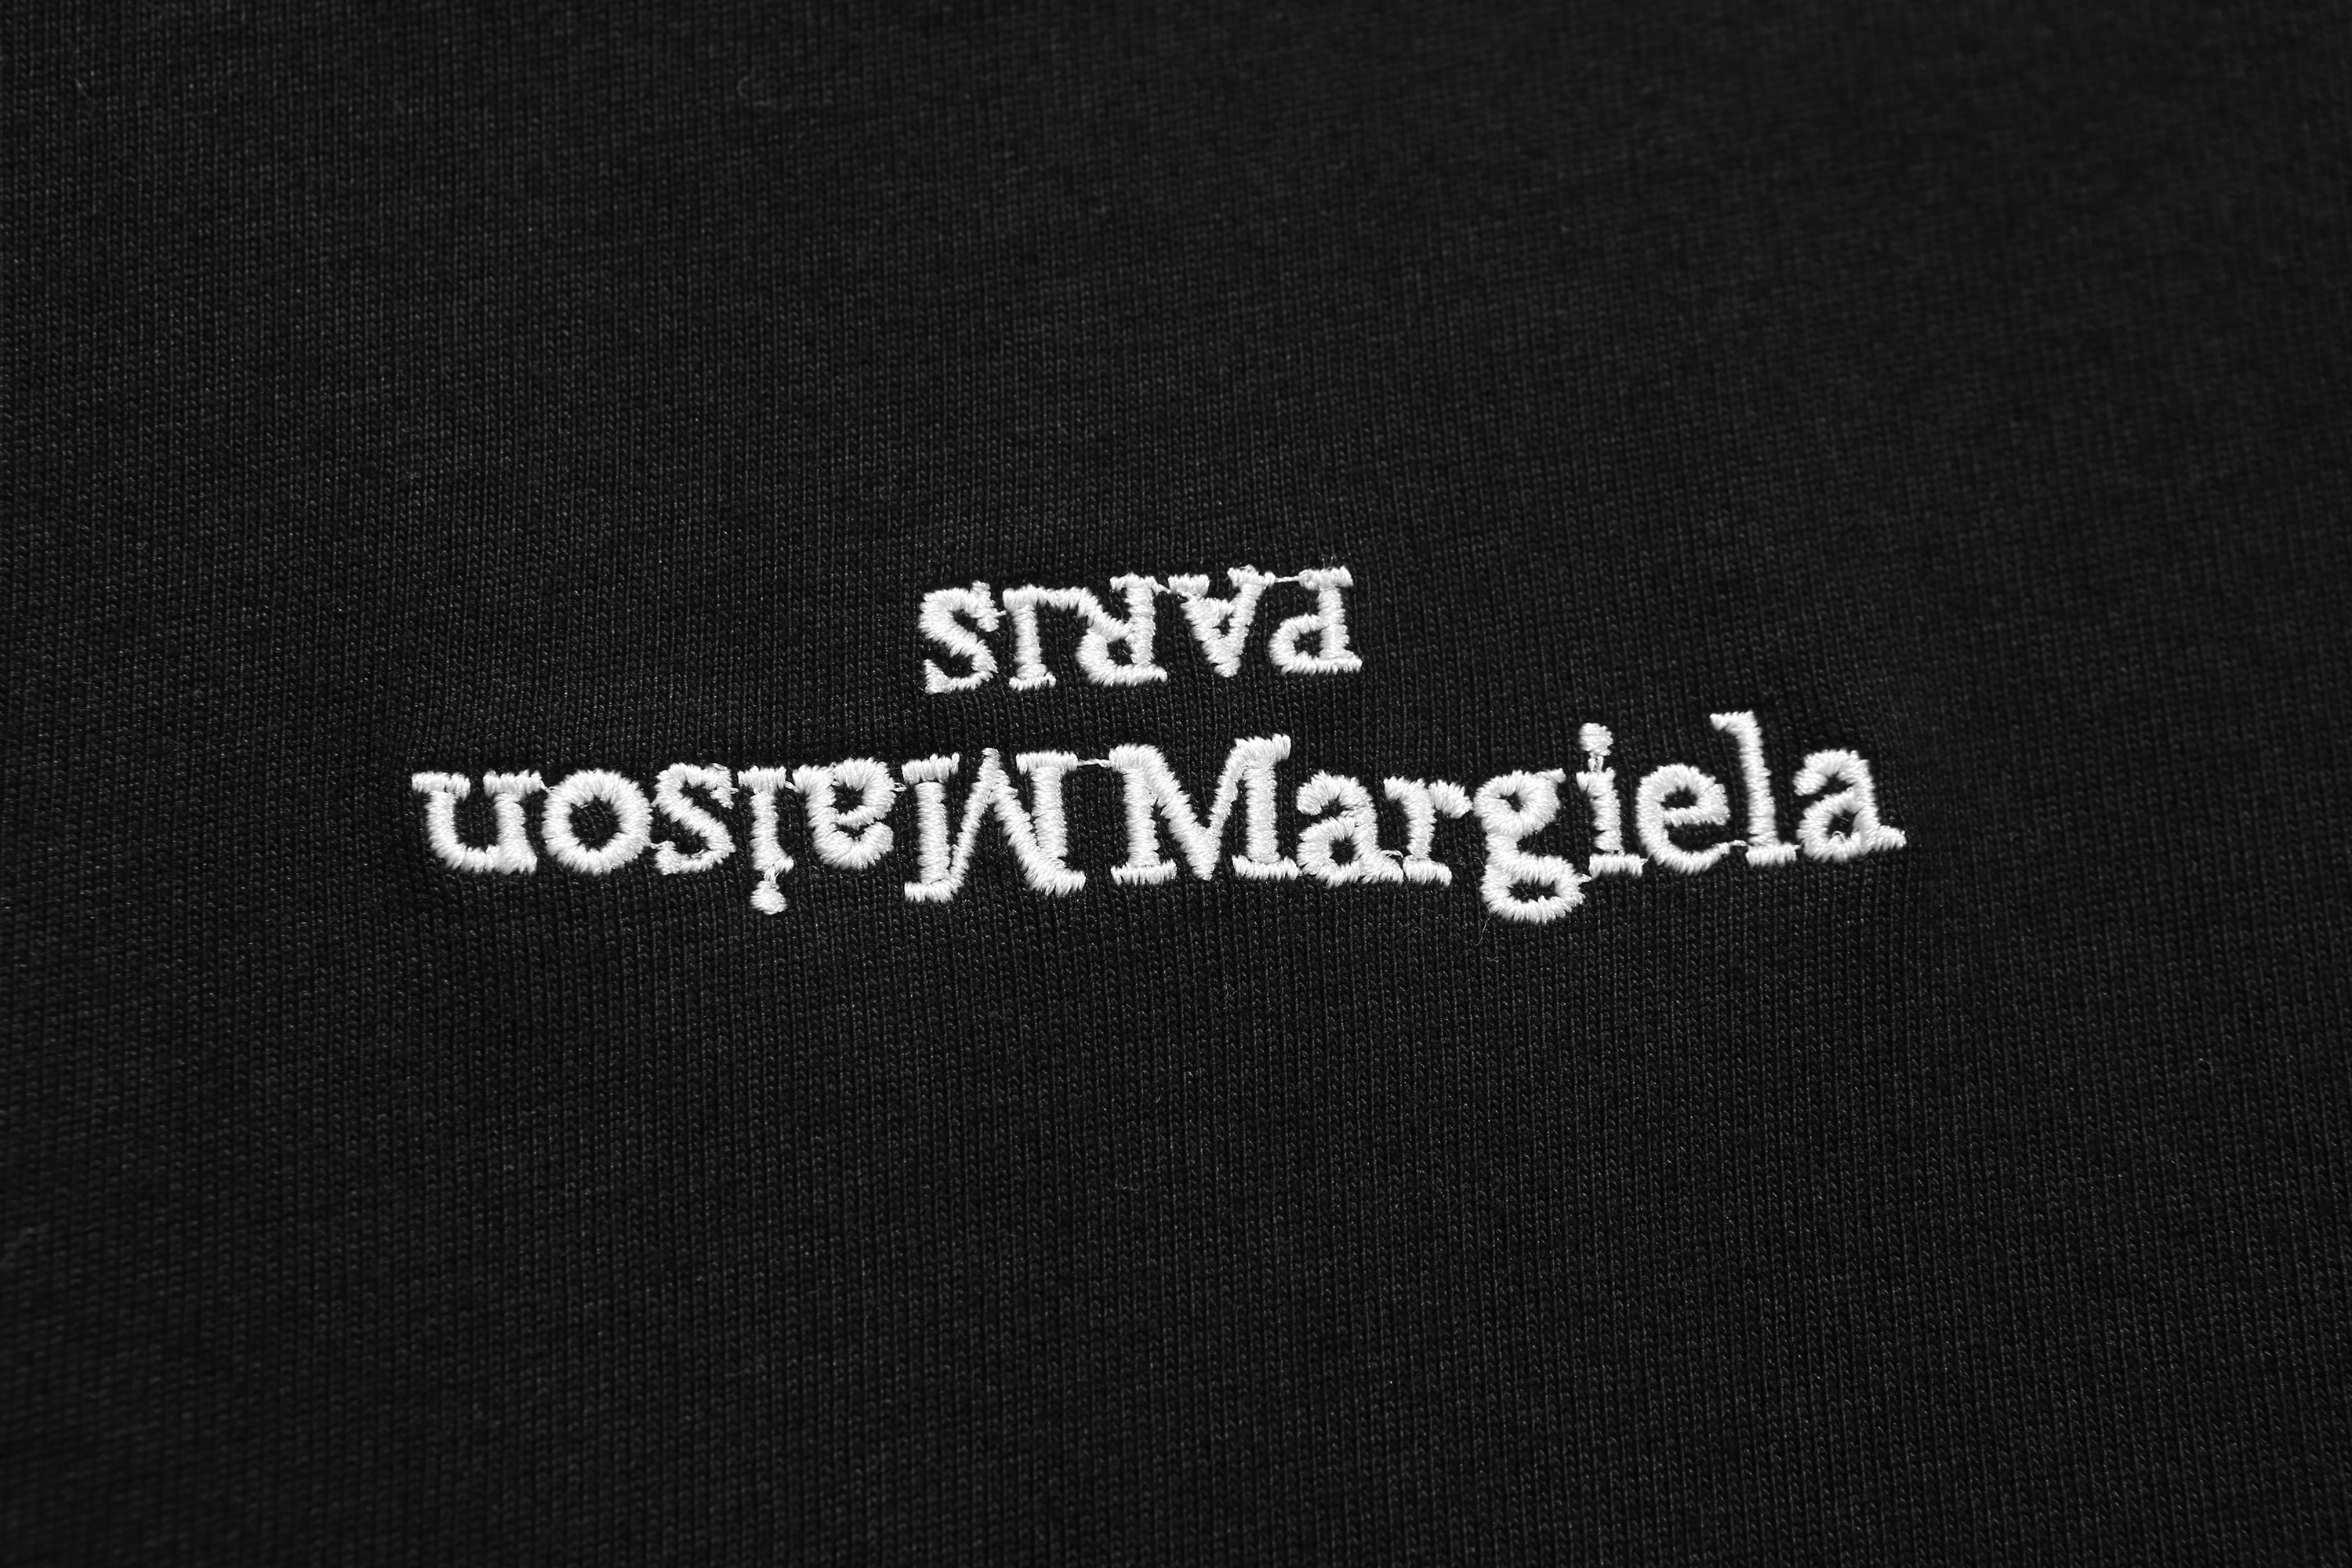 MM6 Masion Margiela Small Reversible Logo T-Shirt 2 Colors